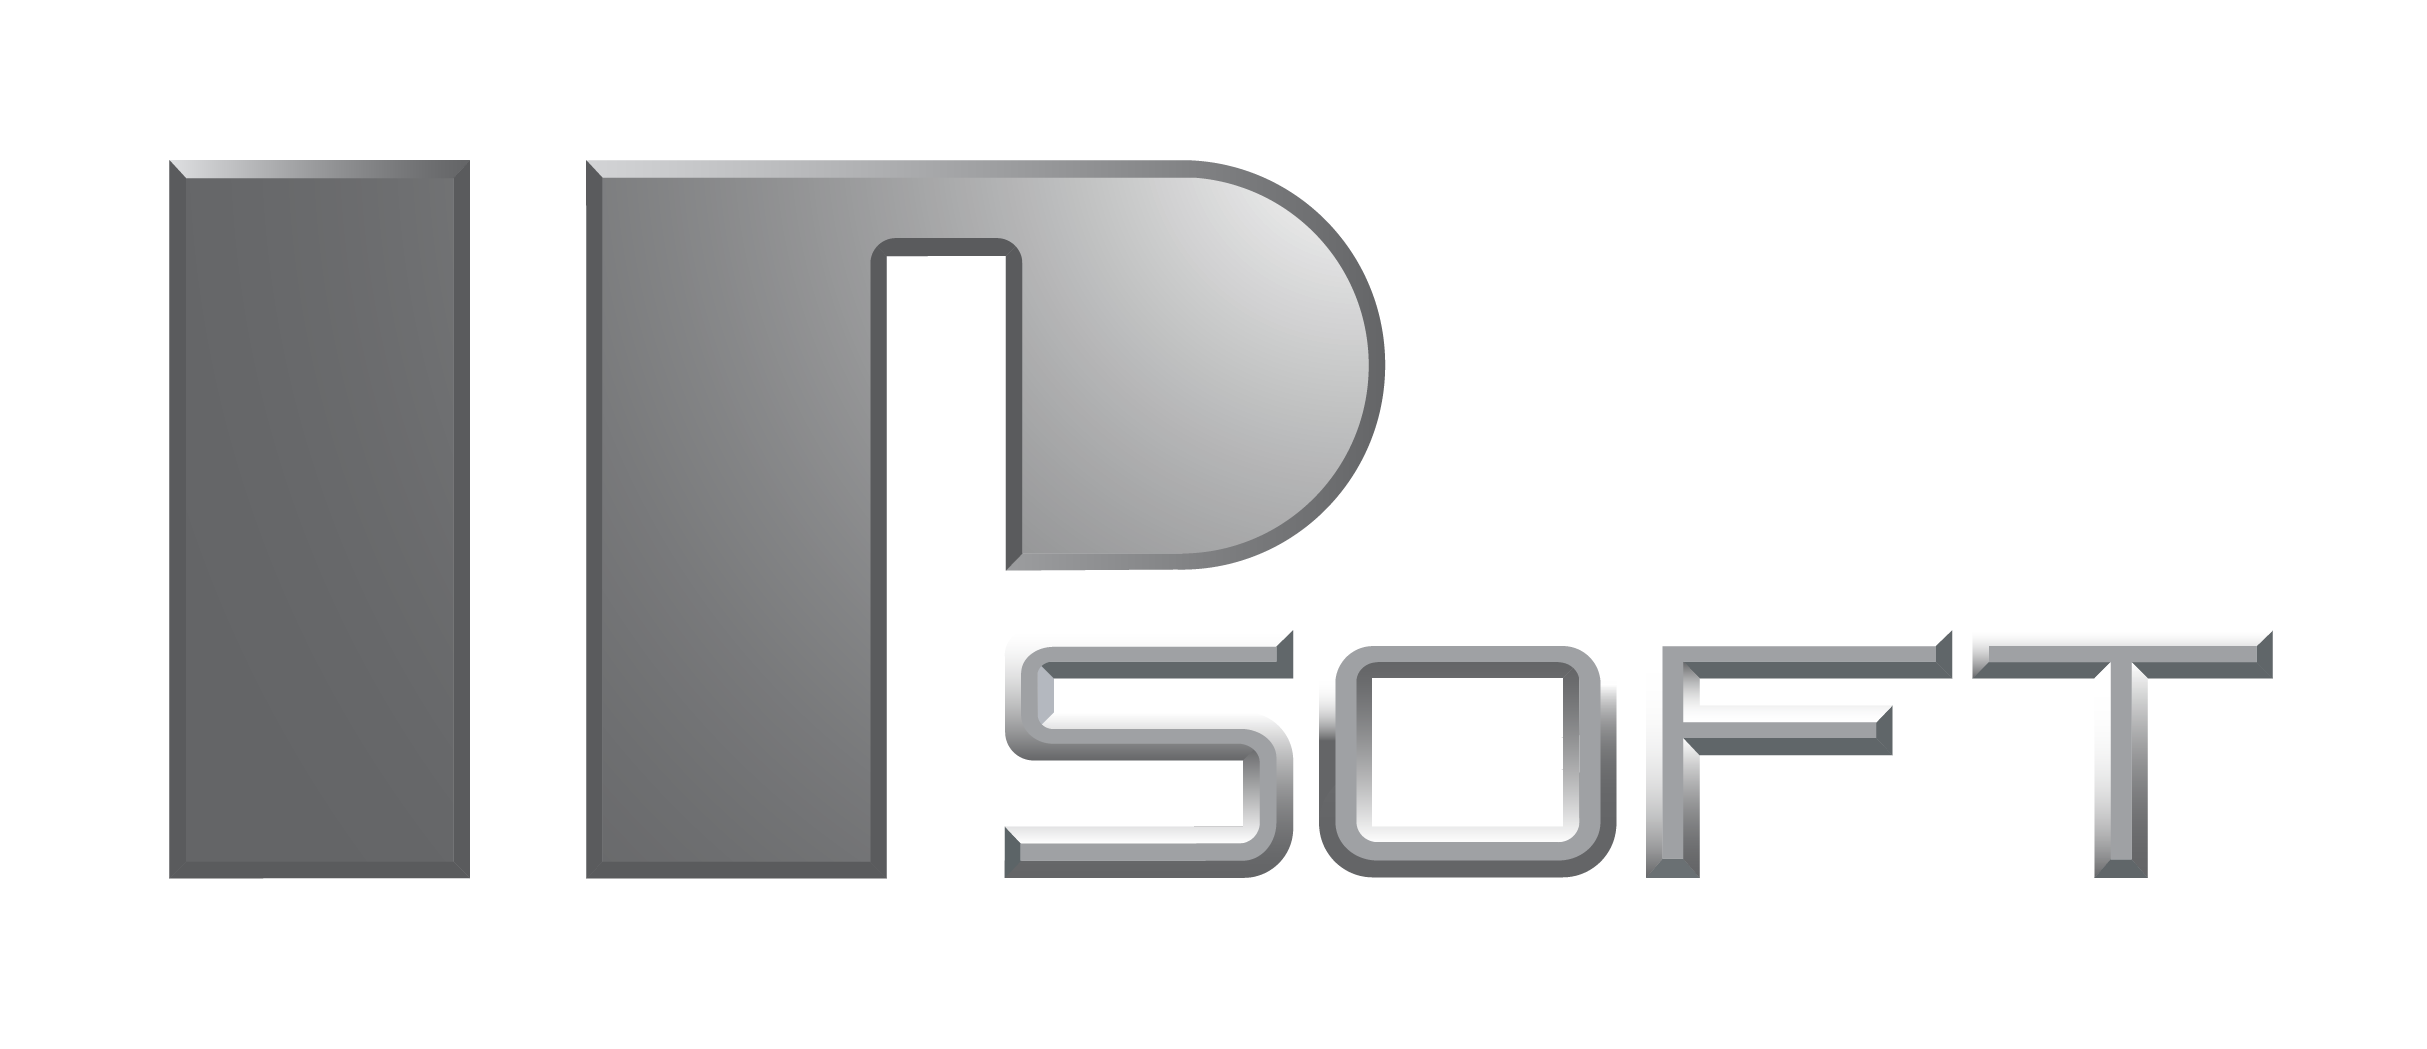 ipsoft-logo no background.png